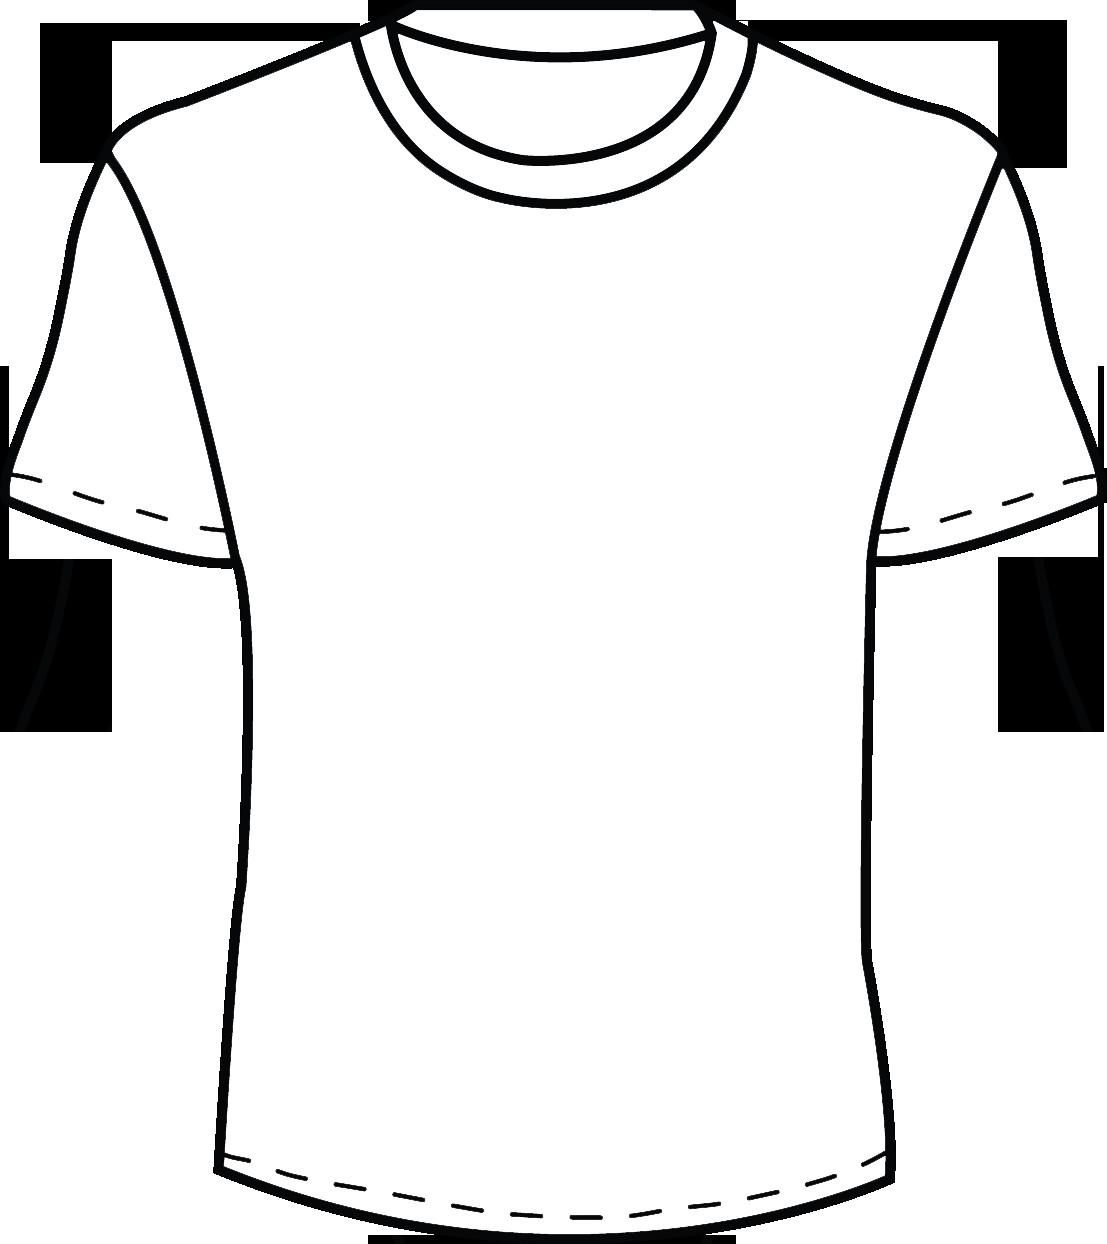 Plain Shirt Coloring Sheets For Girls
 13 White T Shirt Template Blank White T Shirt